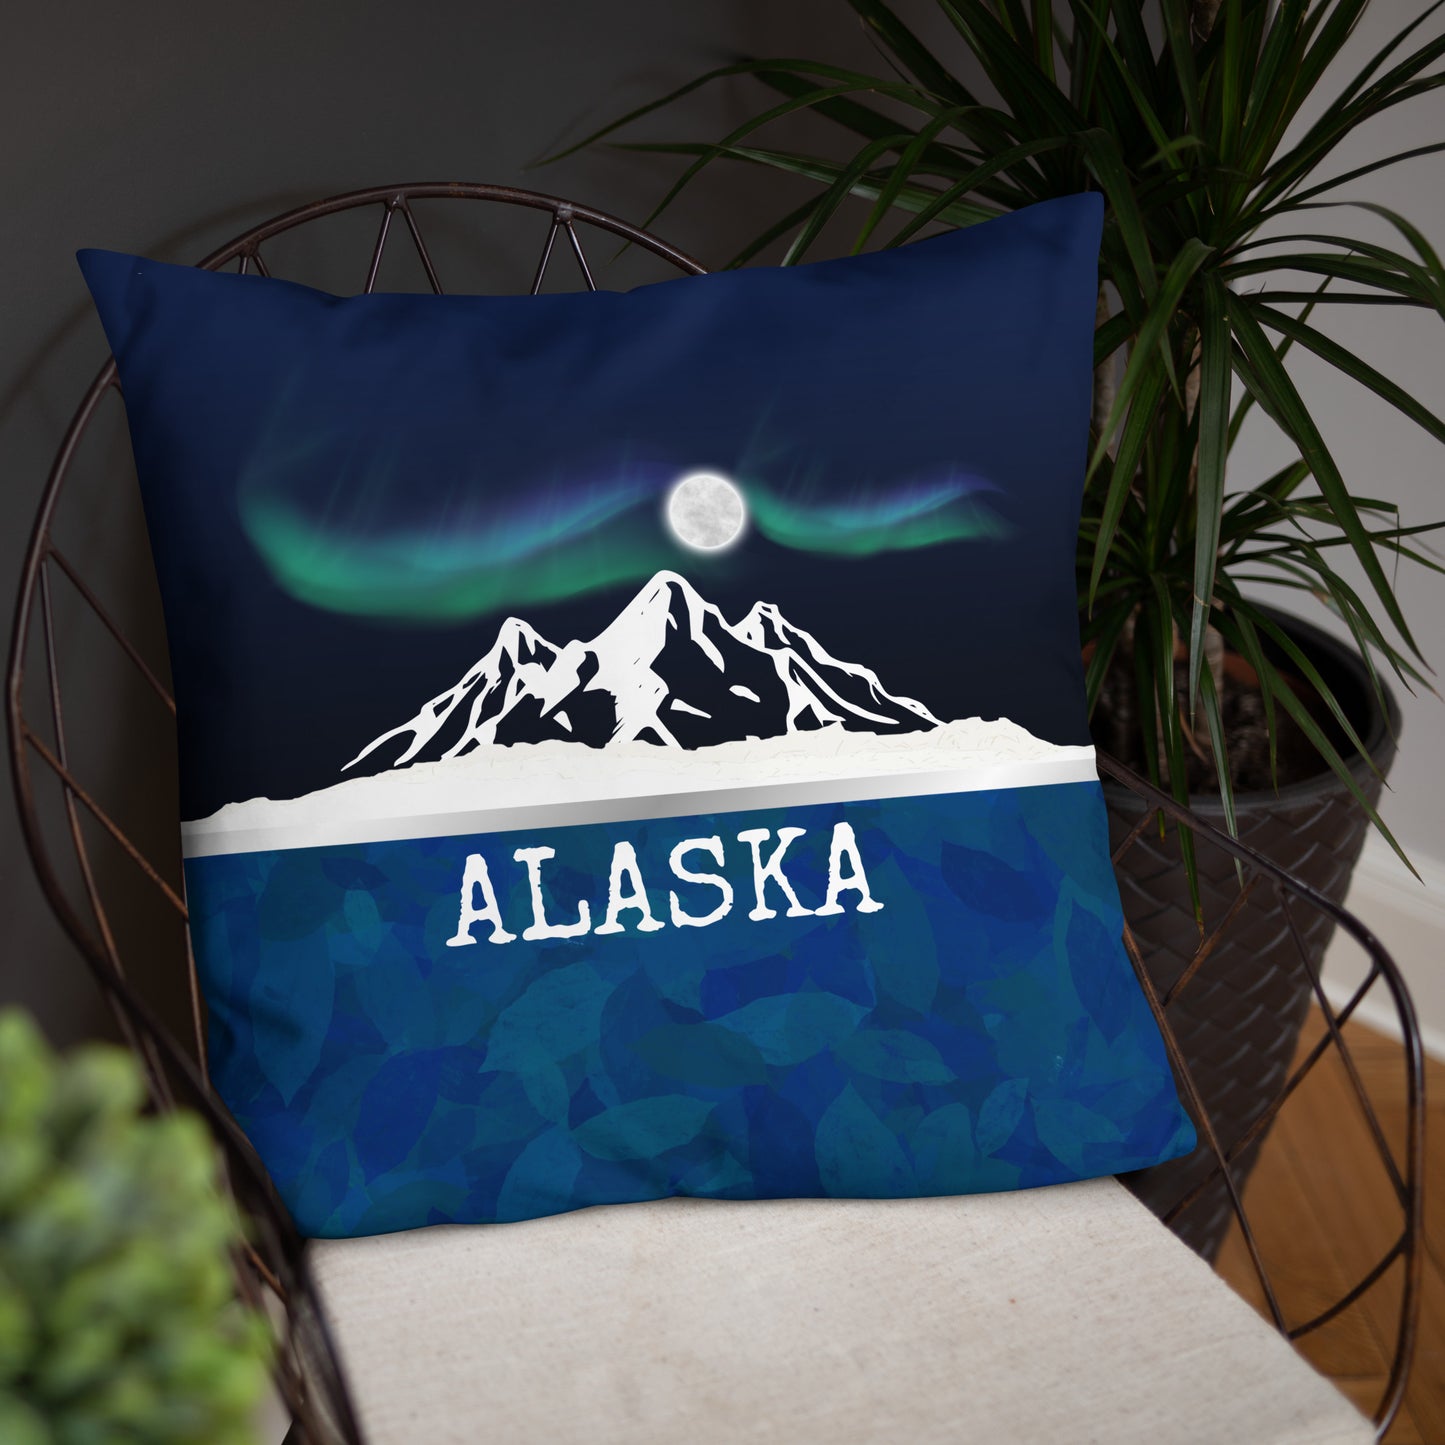 Alaska Travel Gift #1 | Alaska Vacation Gift | Alaska Travel Souvenir | Alaska Vacation Memento | Alaska Home Décor | Keepsake Souvenir Gift | Travel Vacation Gift | Alaska United States Gift Pillow